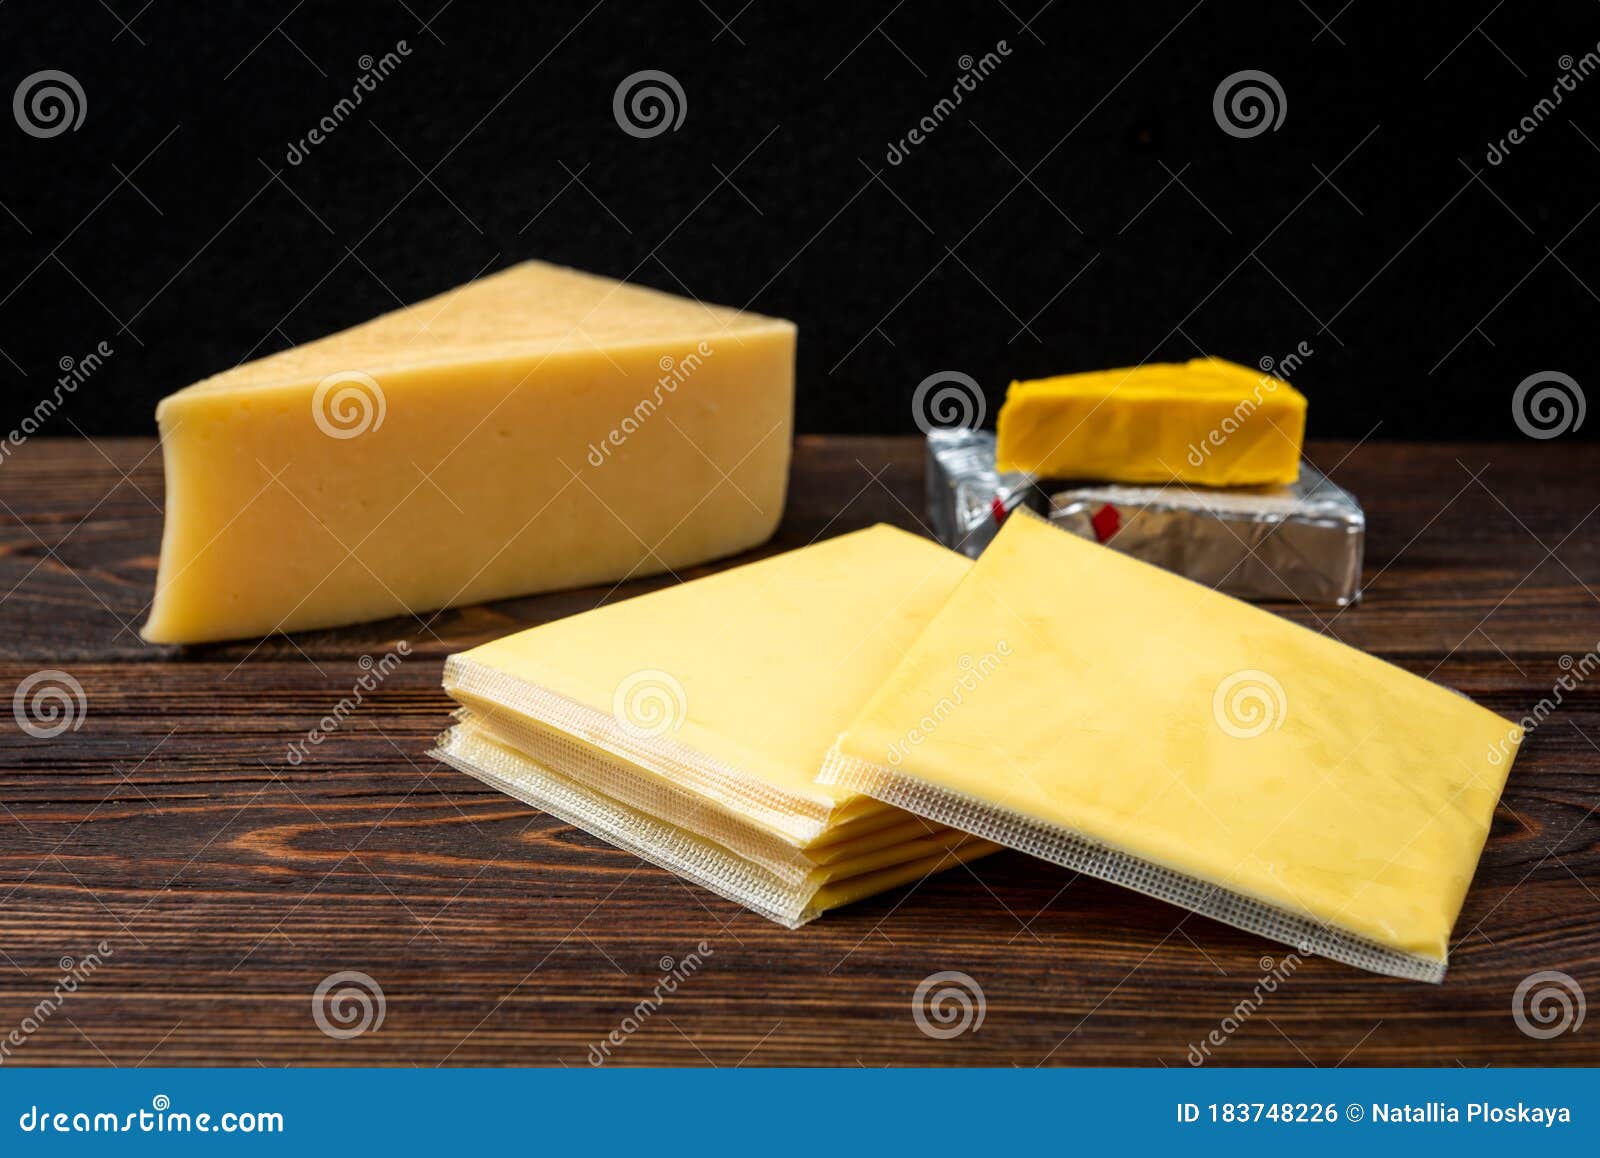 processed cheese on dark wooden background